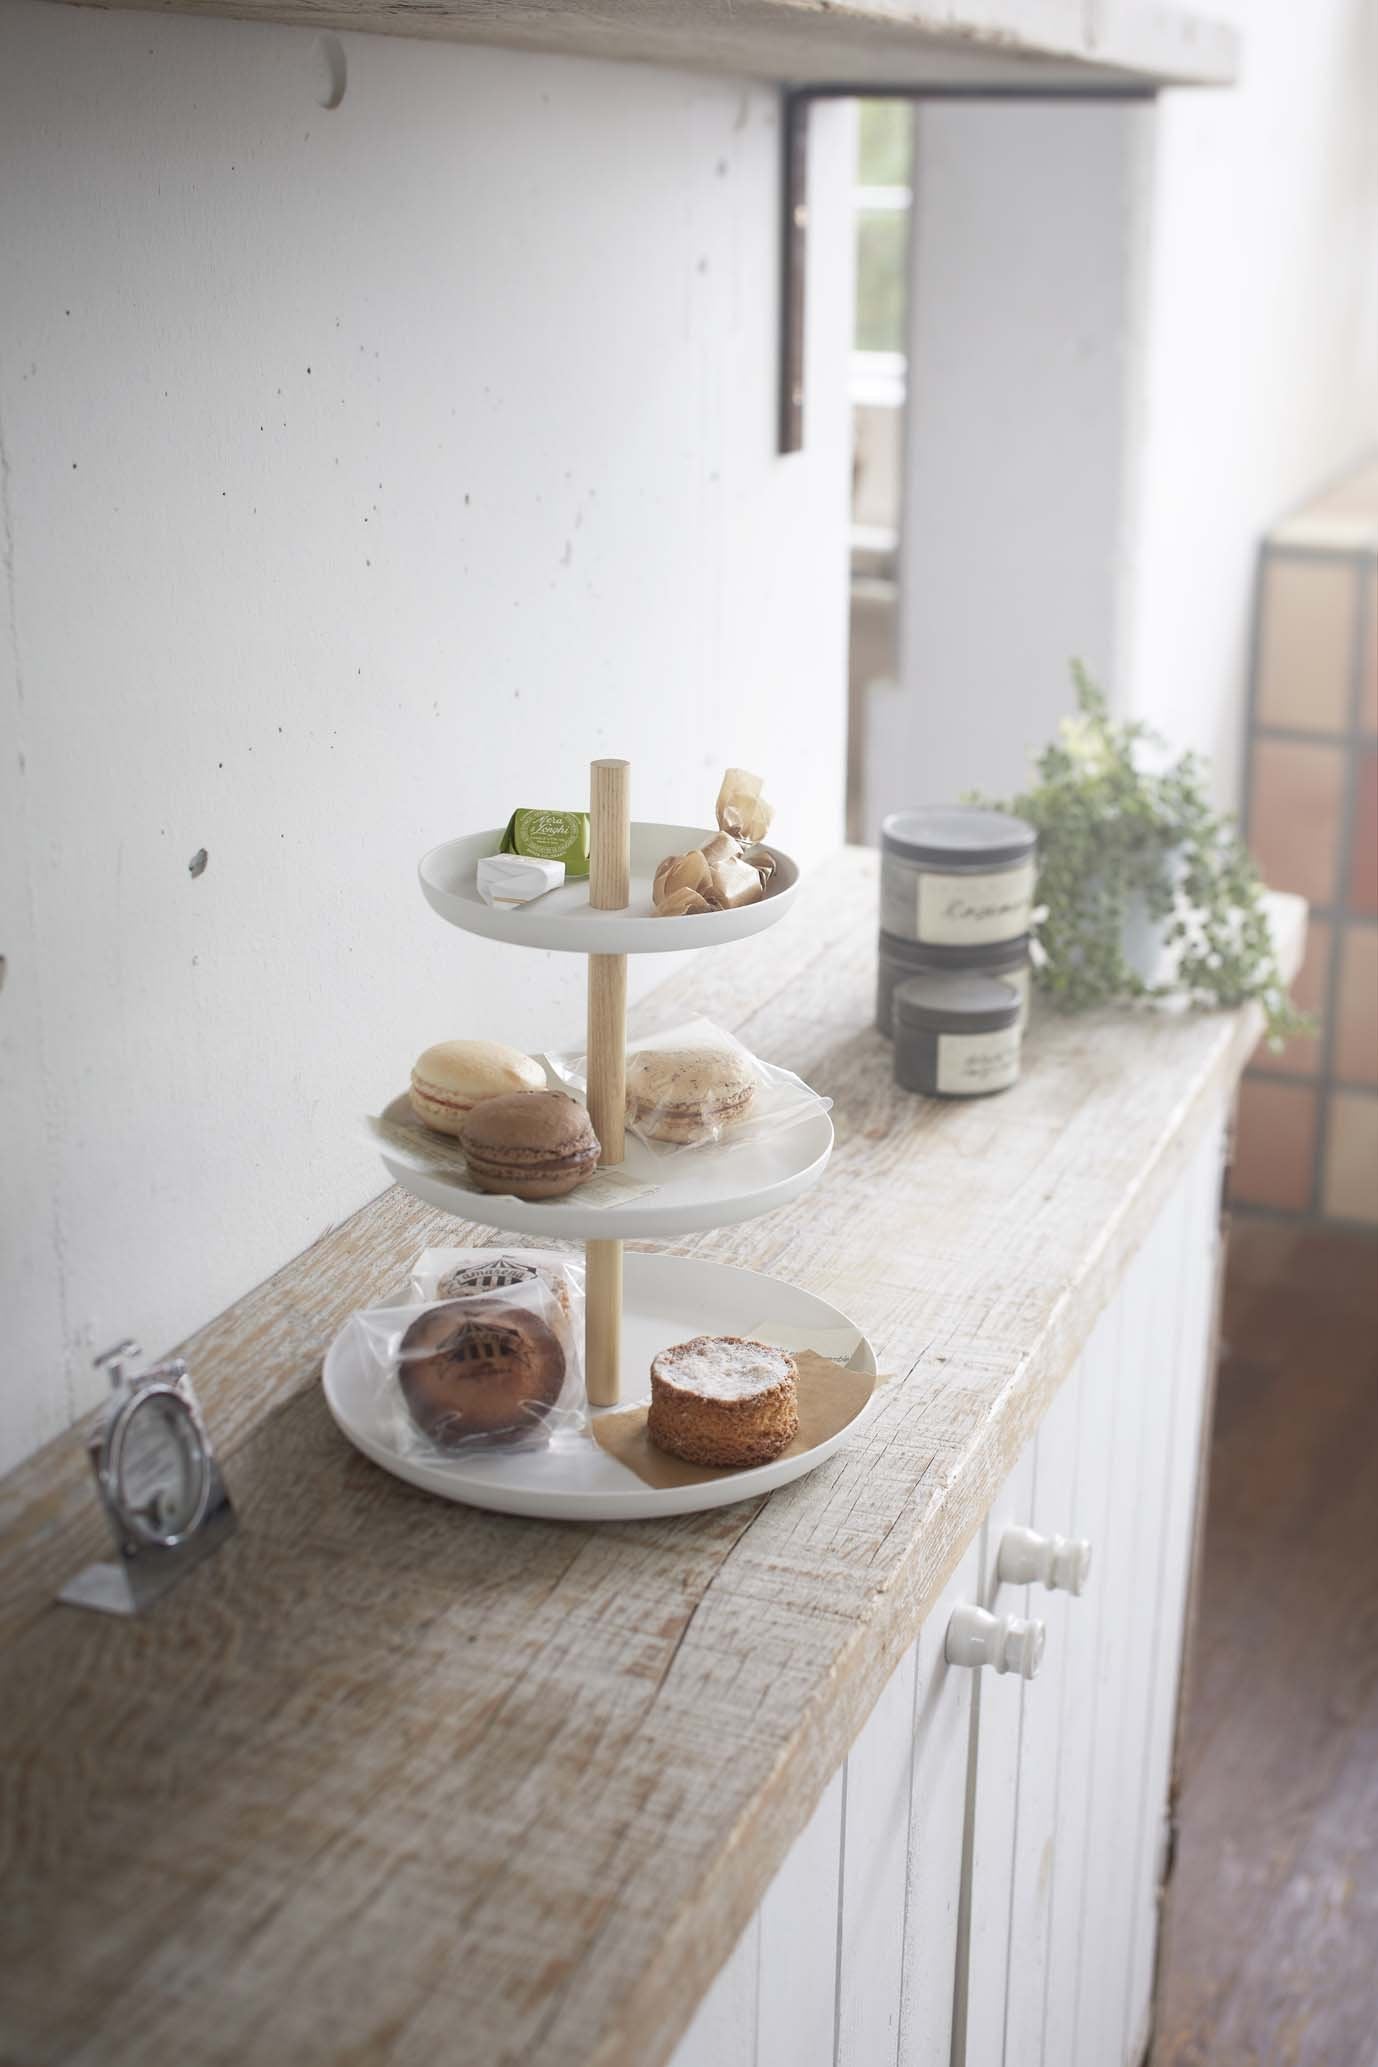 Three-tier Yamazaki tabletop server set with pastries on a kitchen shelf.